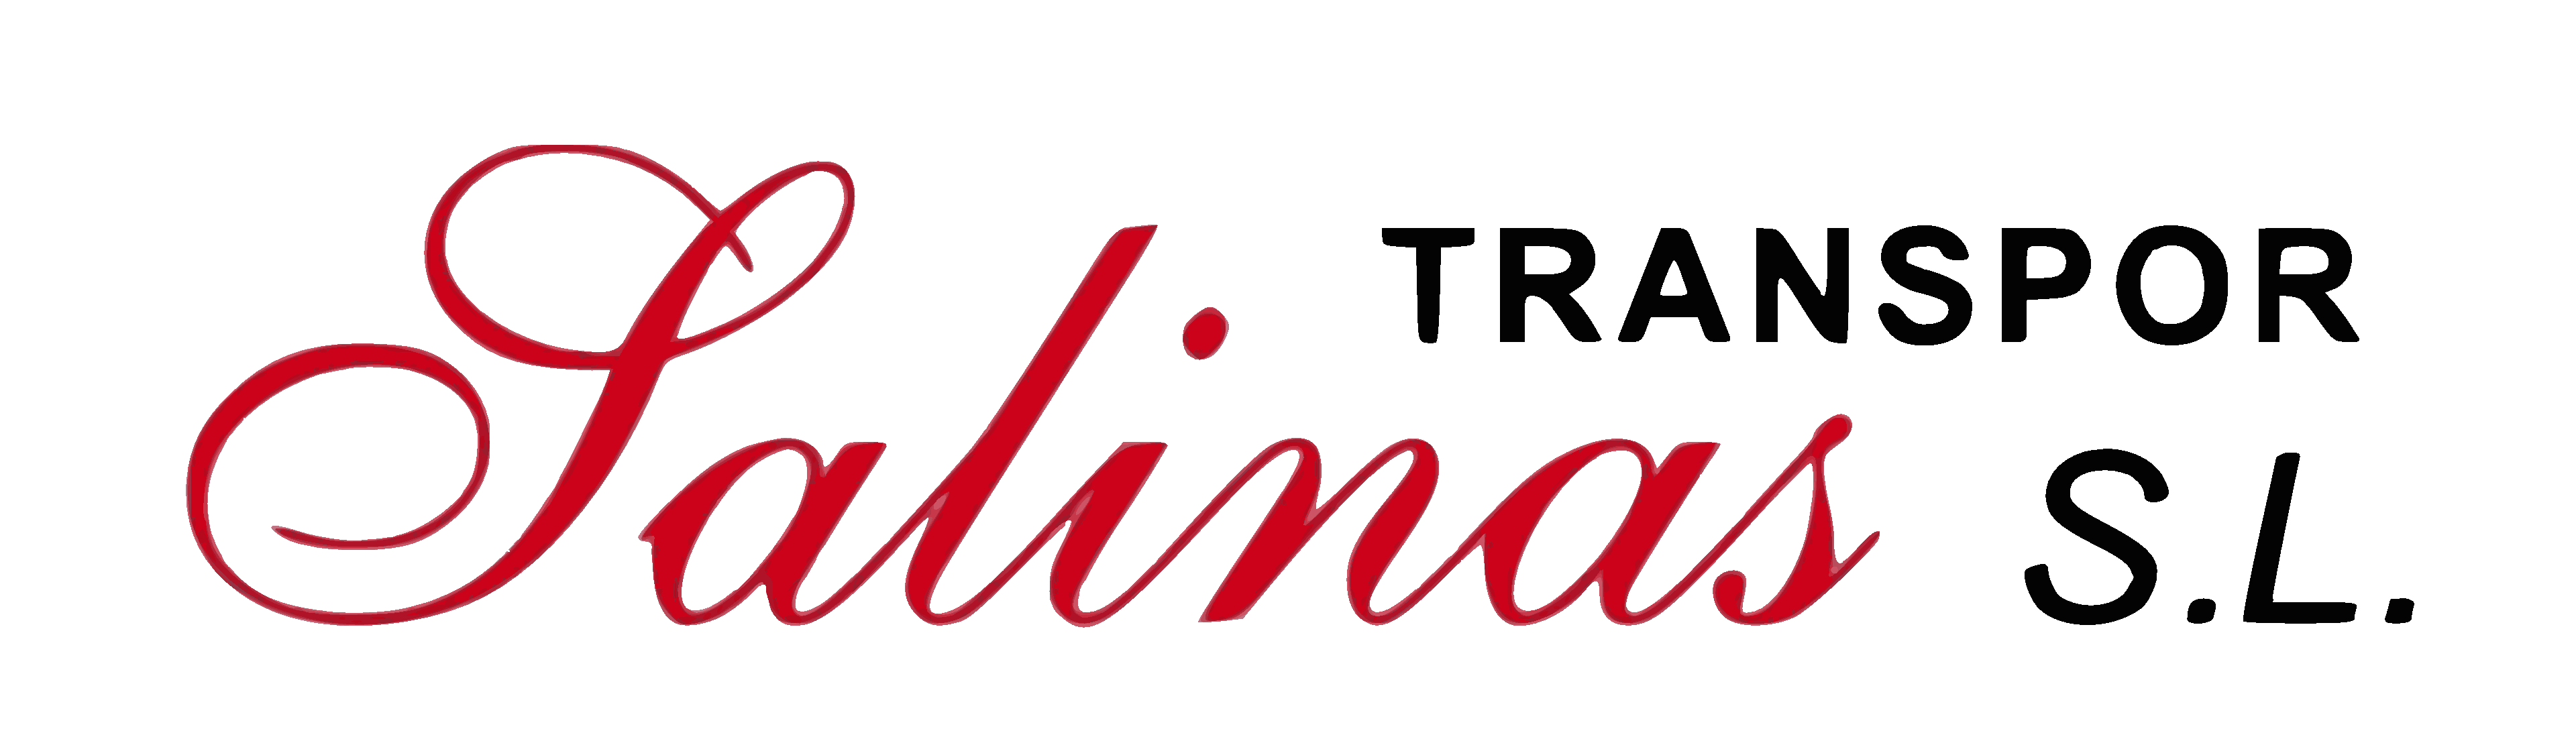 Logo Transpor Salinas